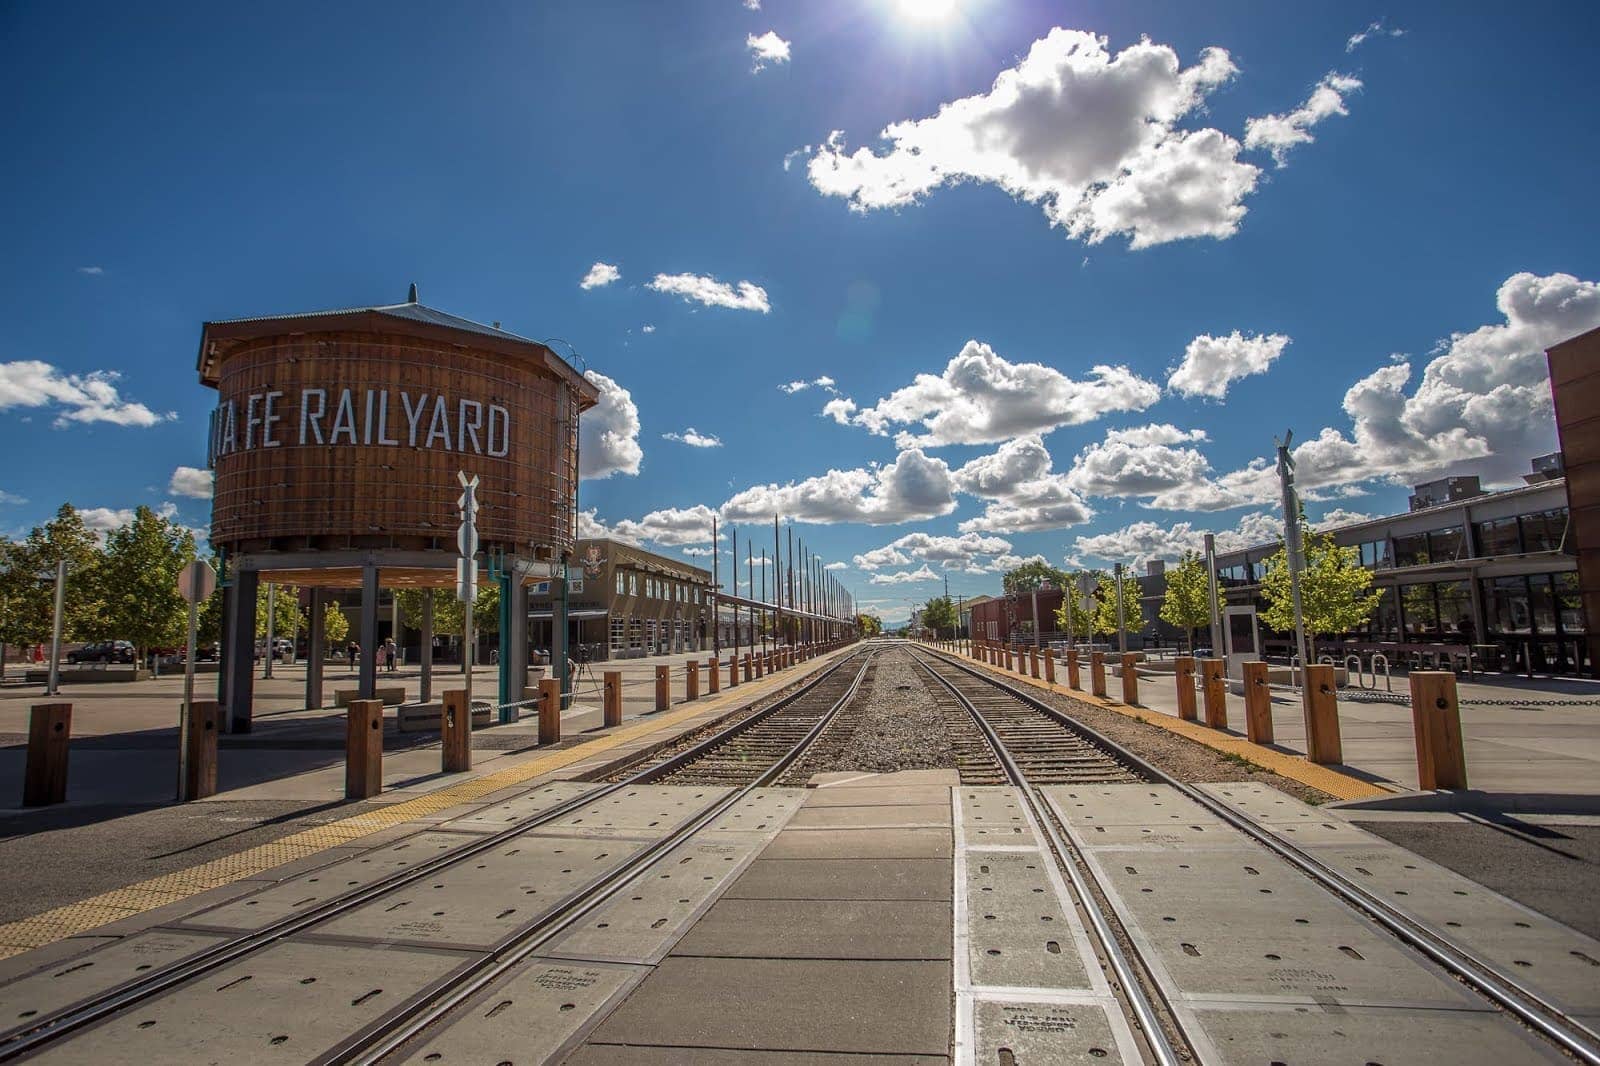 Santa Fe Railyard by Laurence Norah